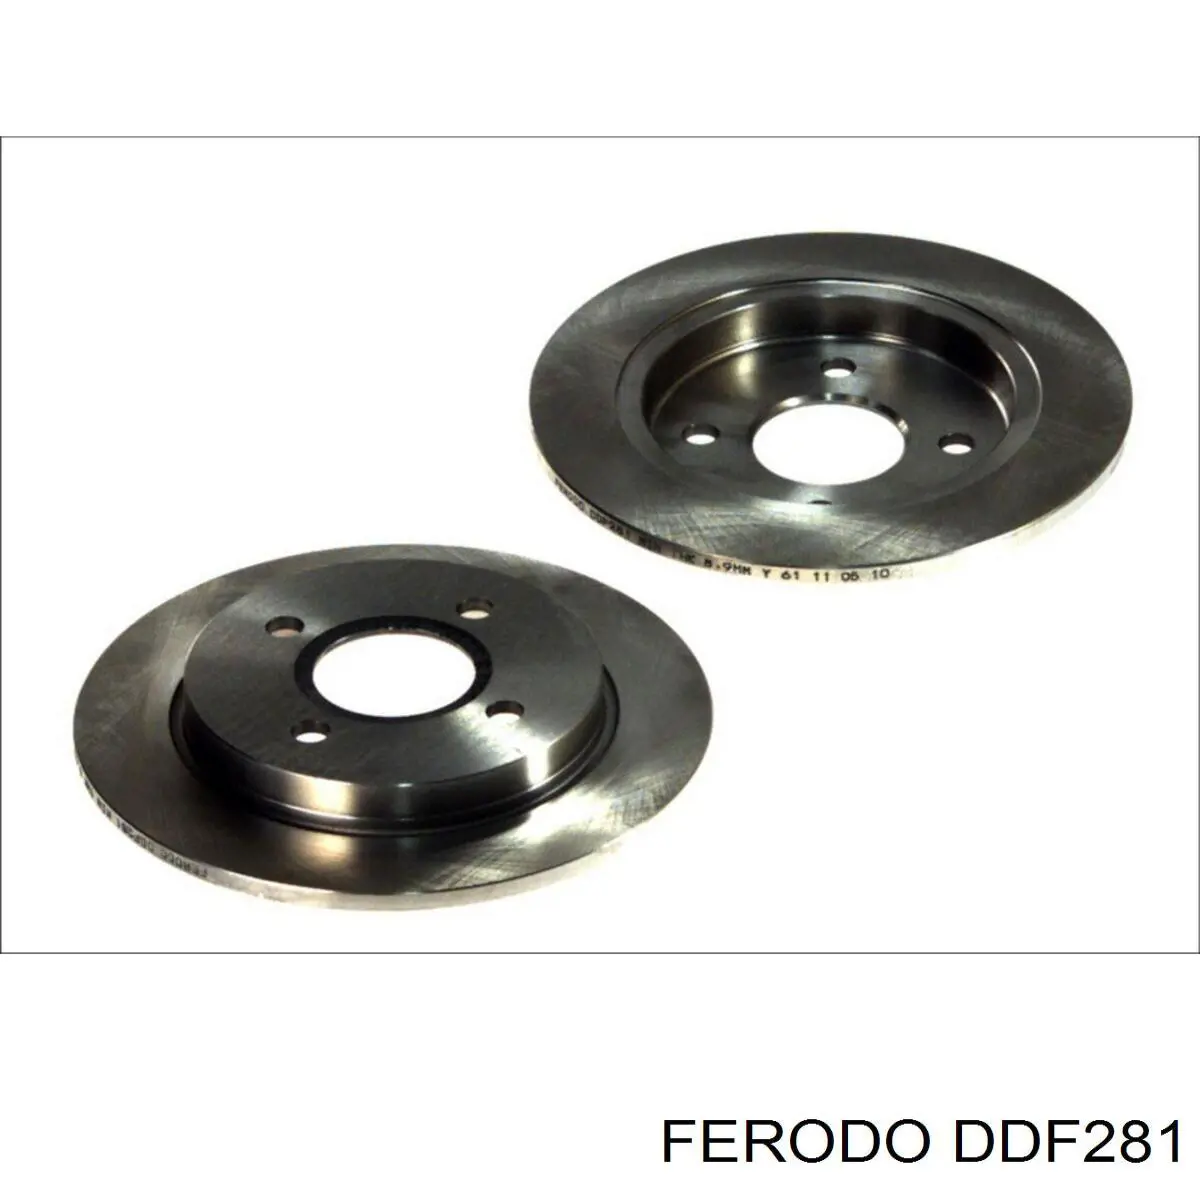 DDF281 Ferodo disco de freno trasero